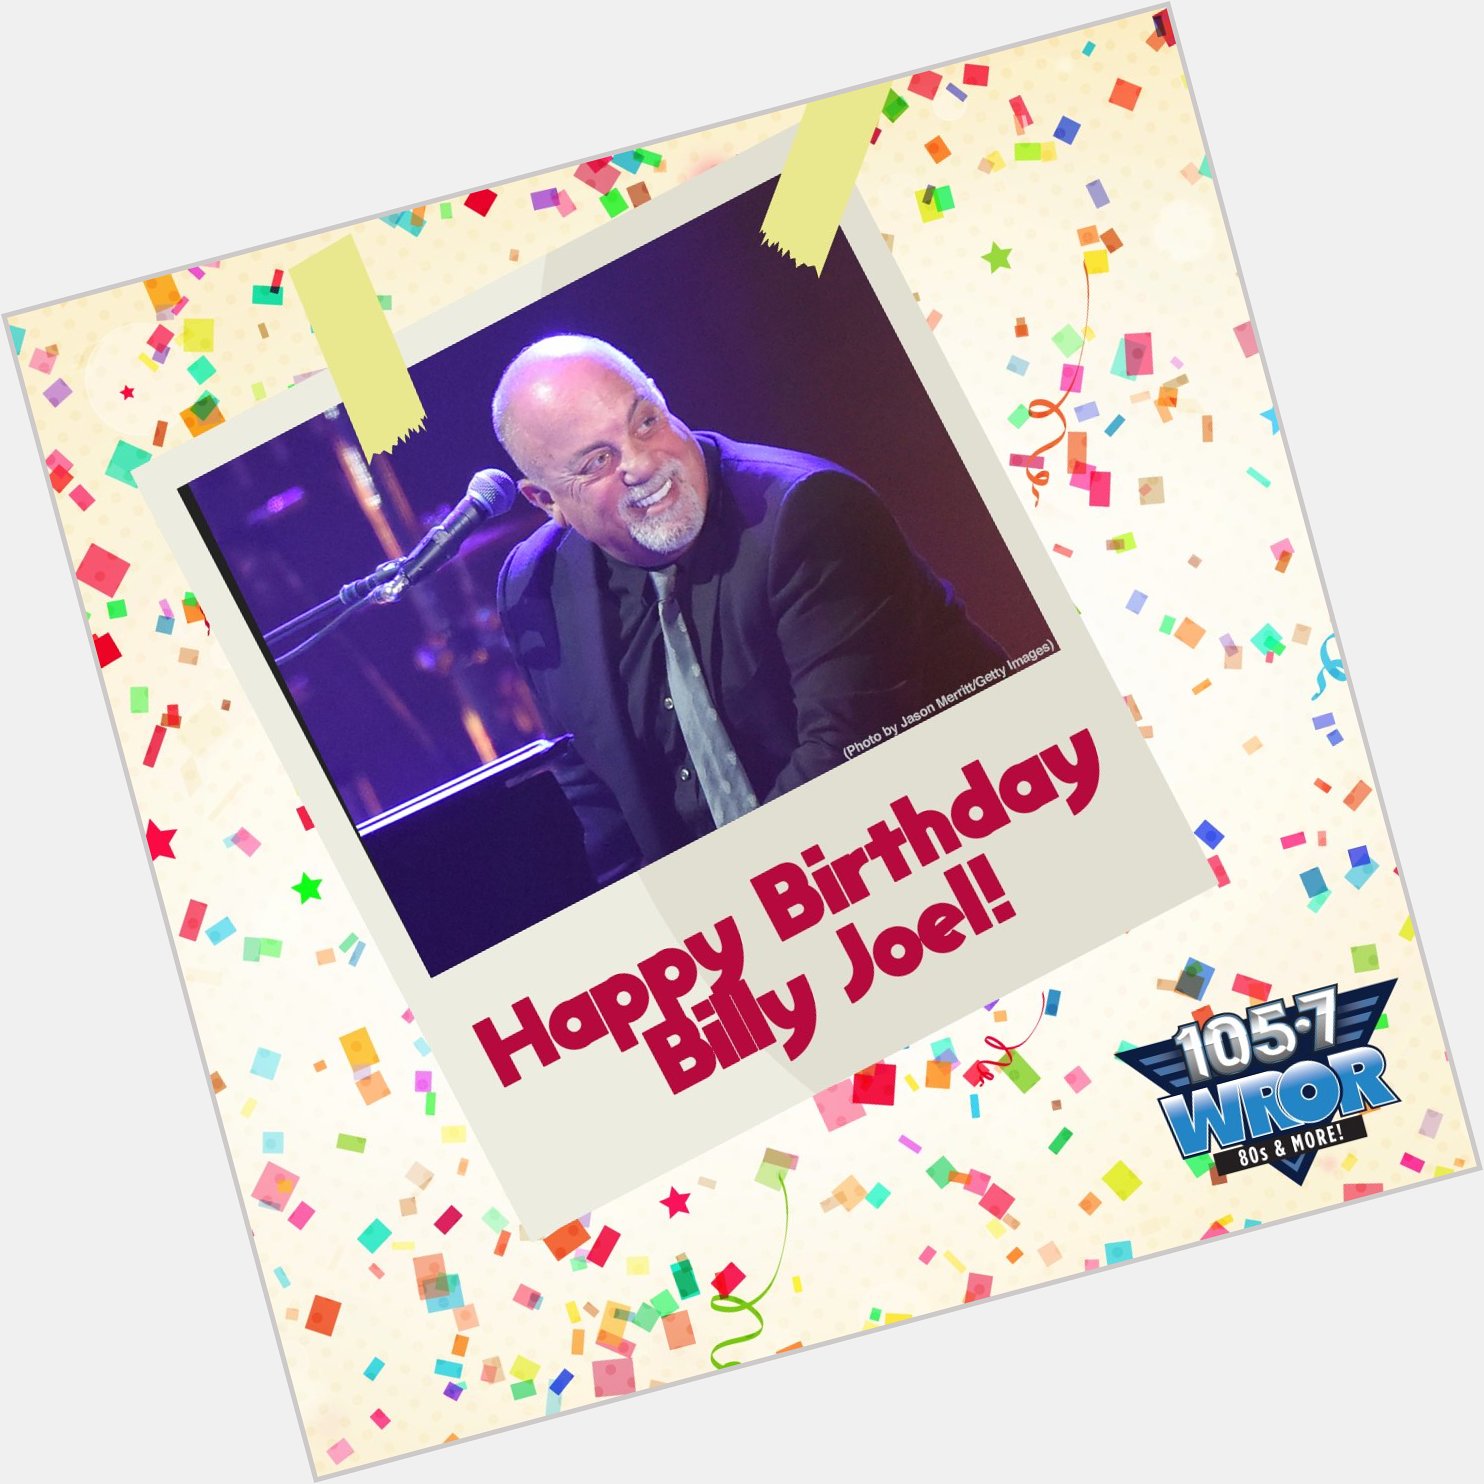 Happy Birthday to the Piano Man himself... Billy Joel! 